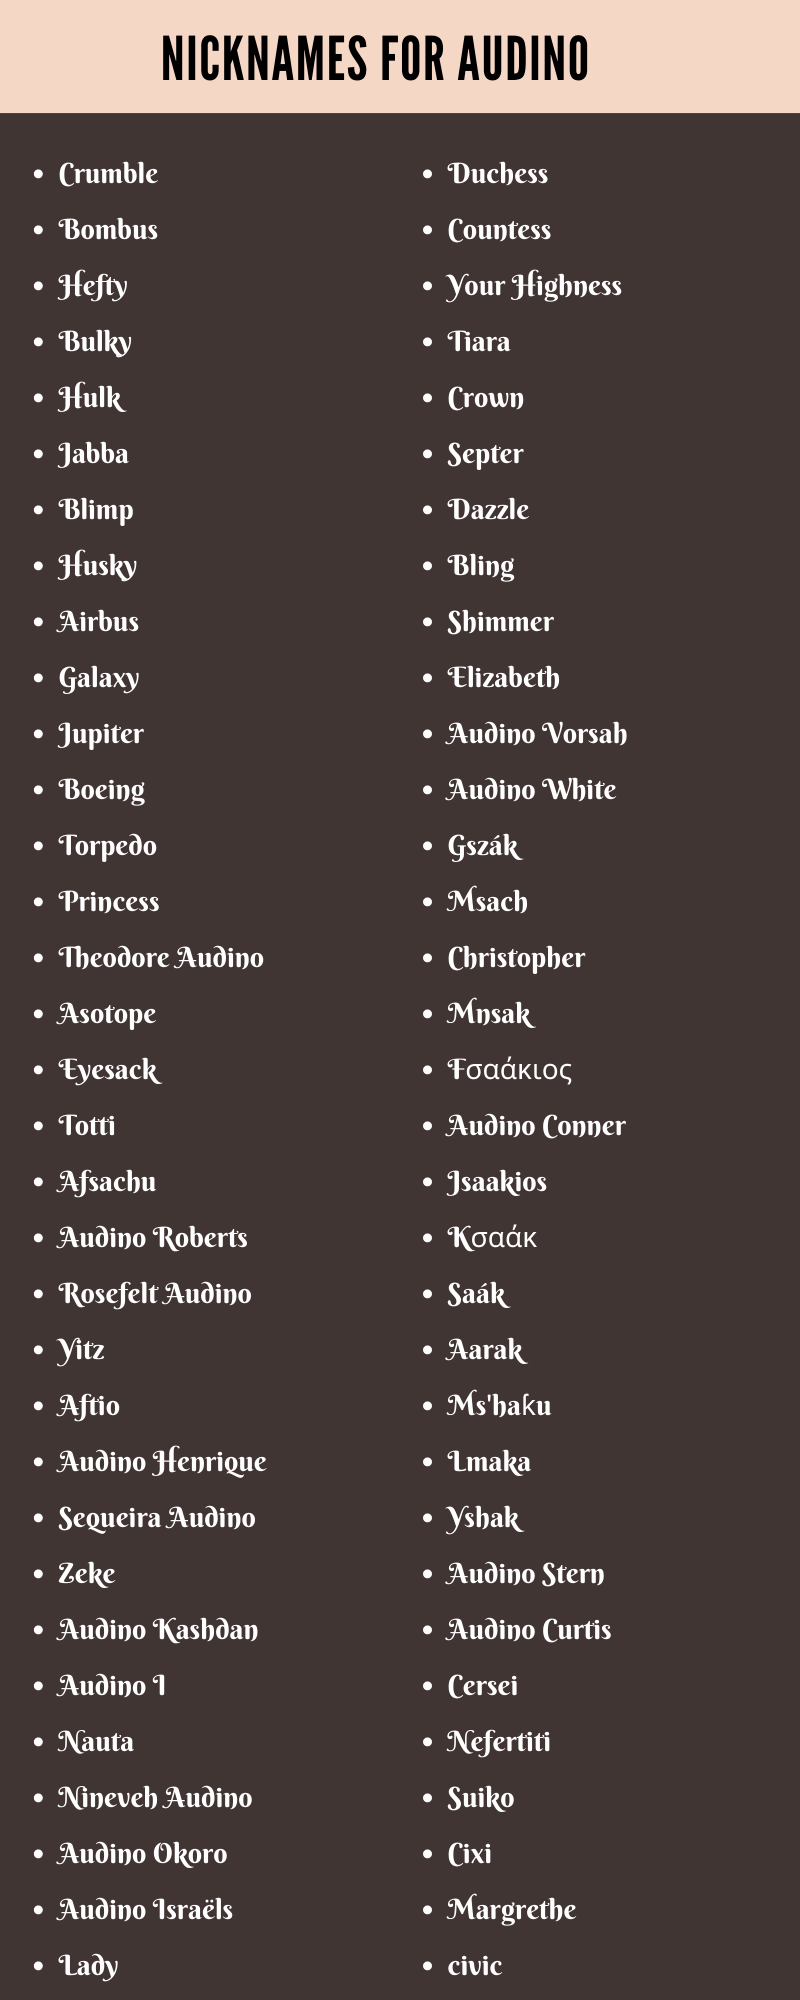 Nicknames For Audino